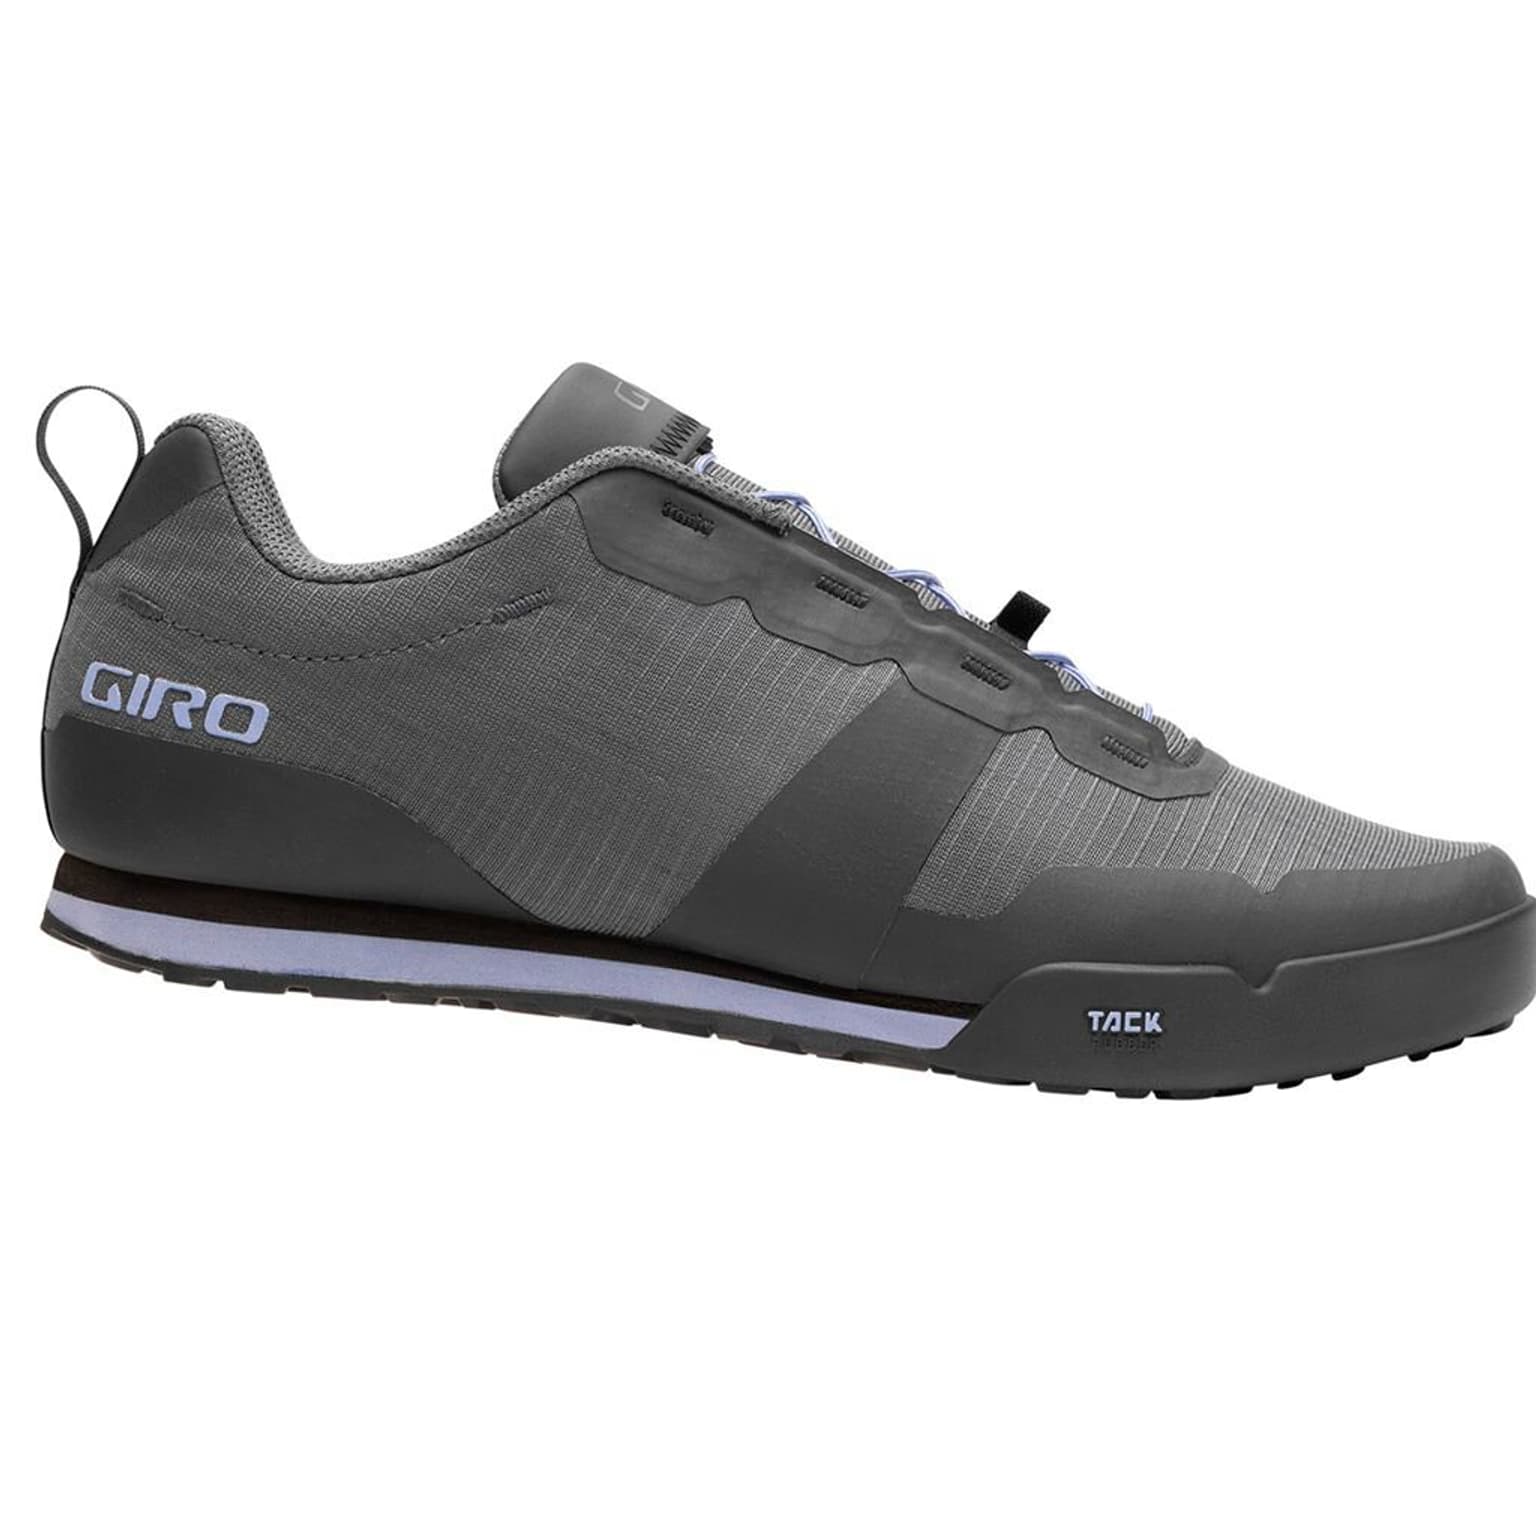 Giro Giro Tracker W FL Shoe Chaussures de cyclisme antracite 1